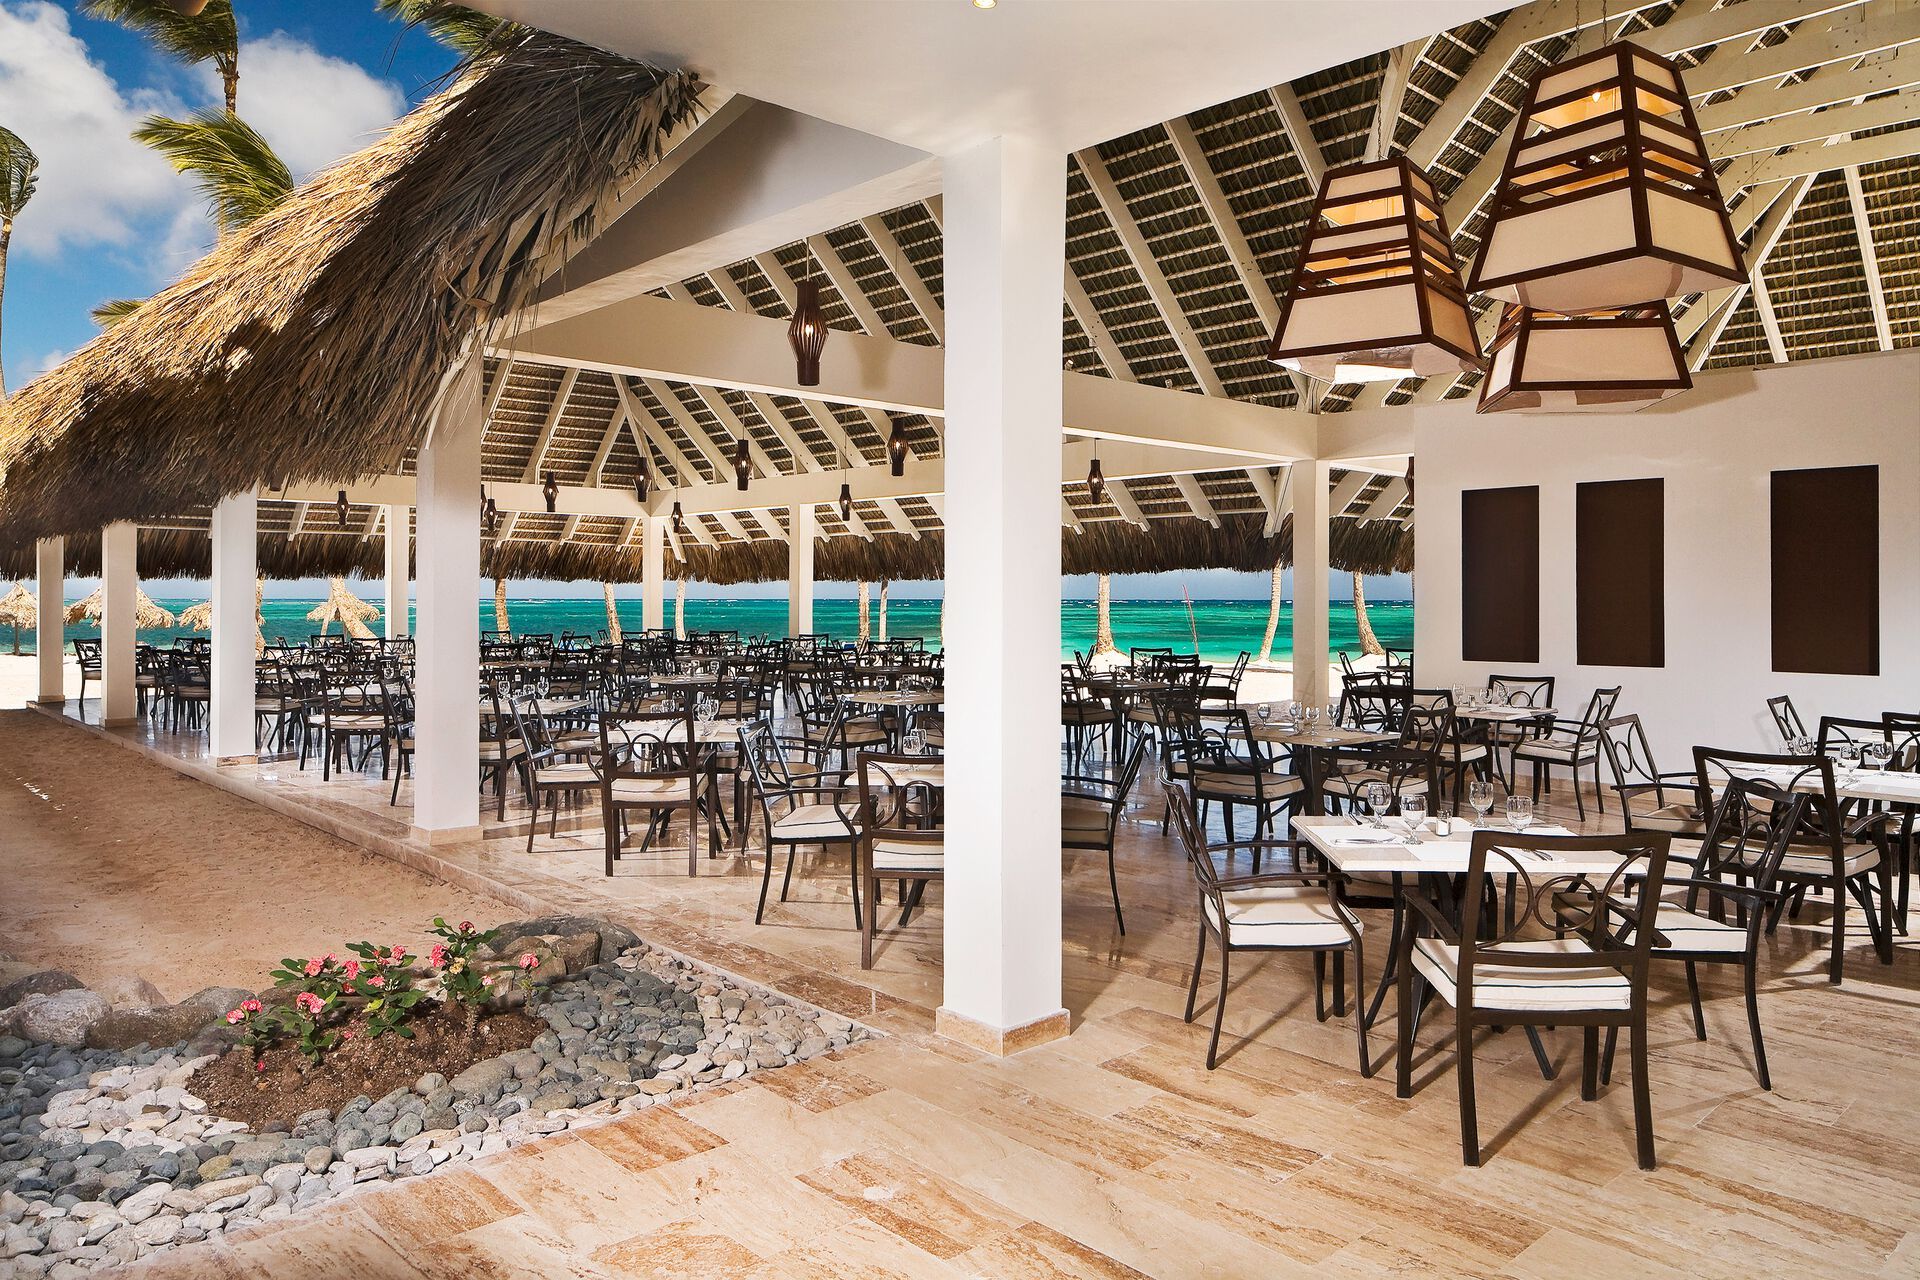 République Dominicaine - Punta Cana - Hôtel Melia Punta Cana Beach - A Wellness Inclusive Resort - Adults Only 5*